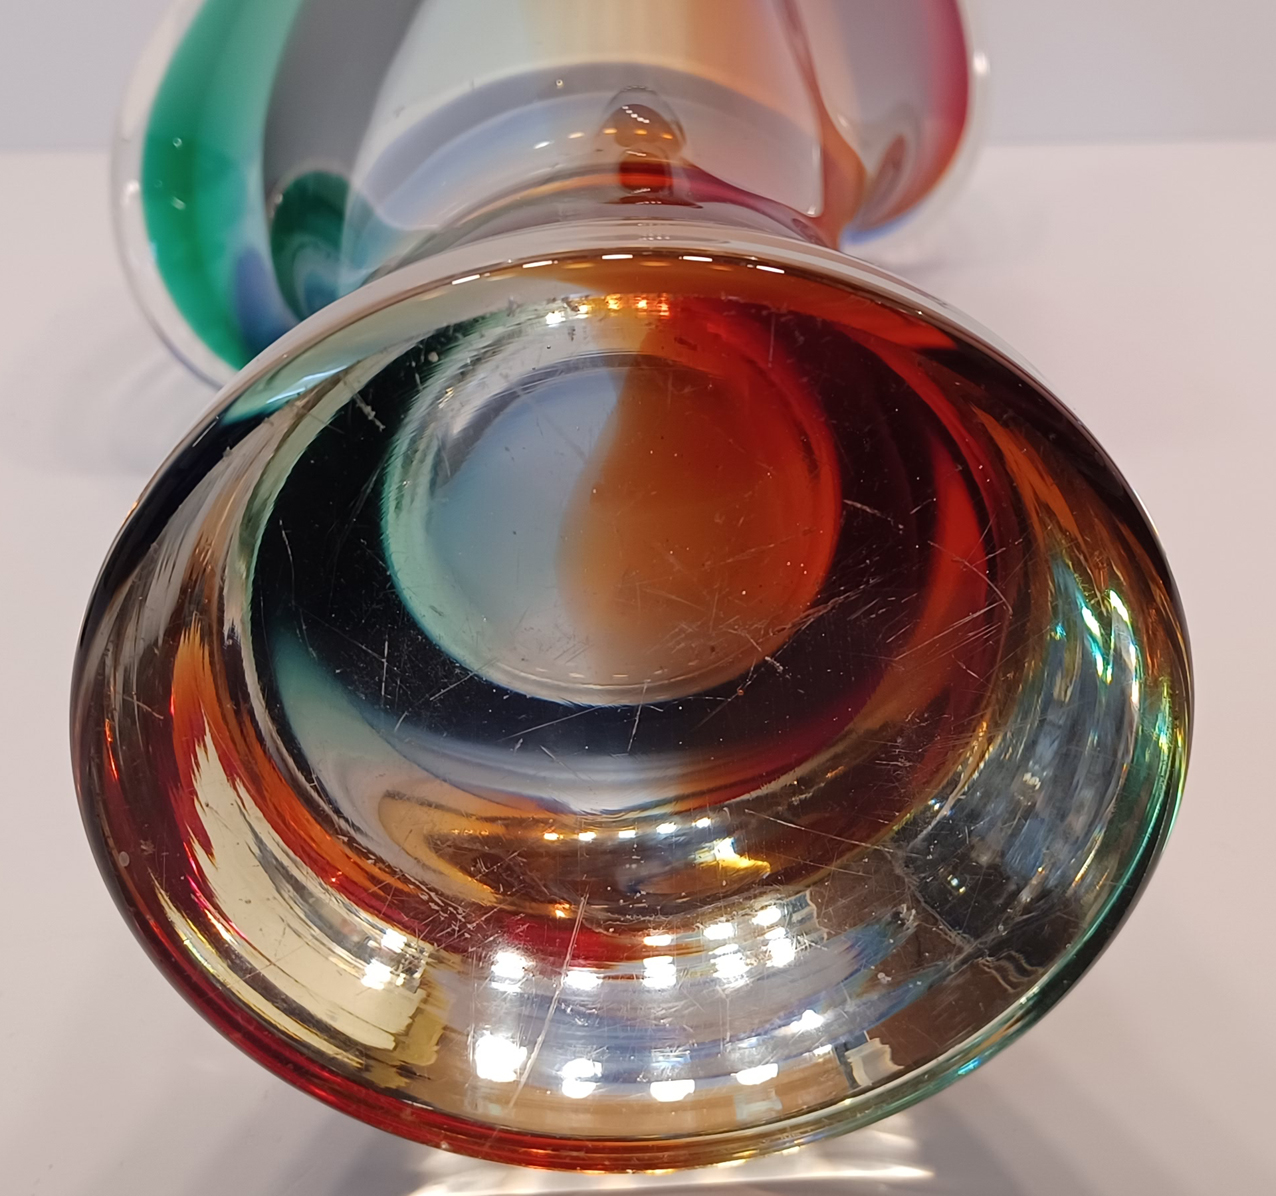 2 MURANO COLOURED ART GLASS 16" TALLEST  - Image 4 of 4